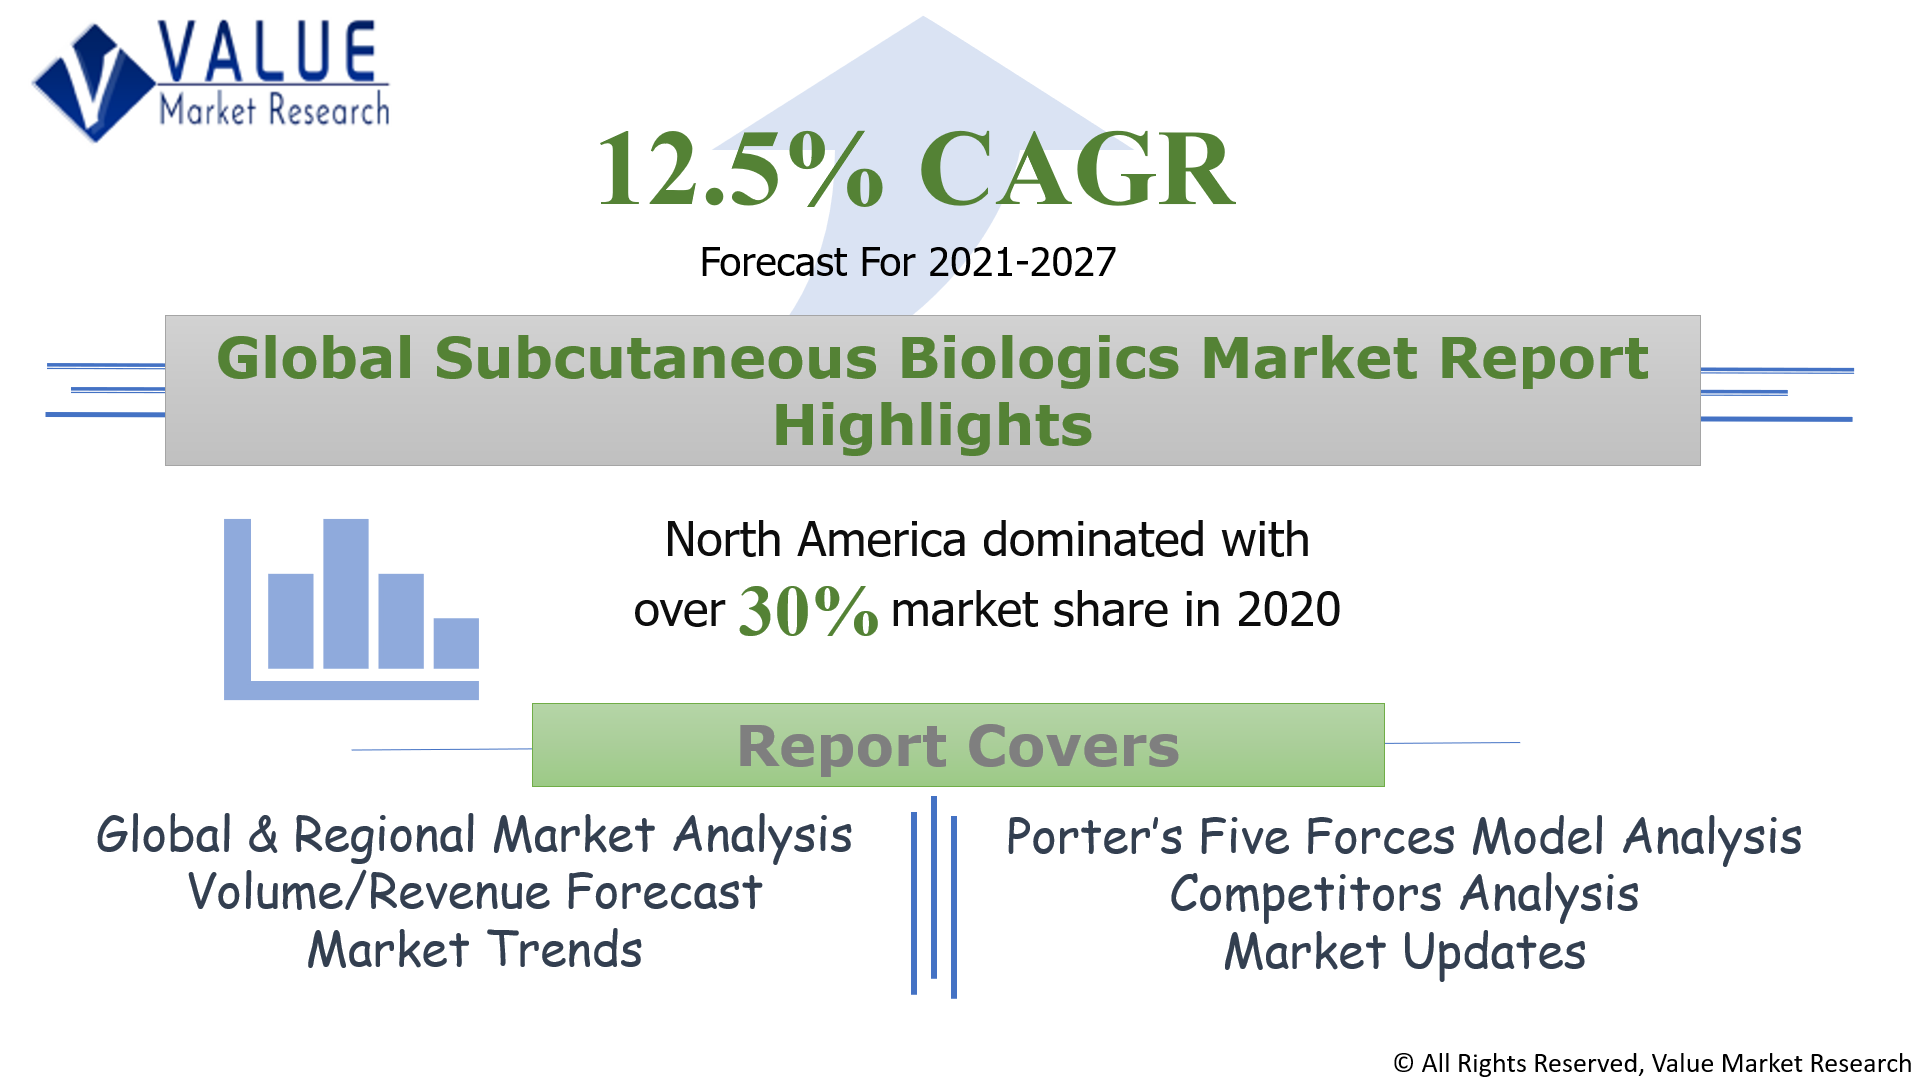 Global Subcutaneous Biologics Market